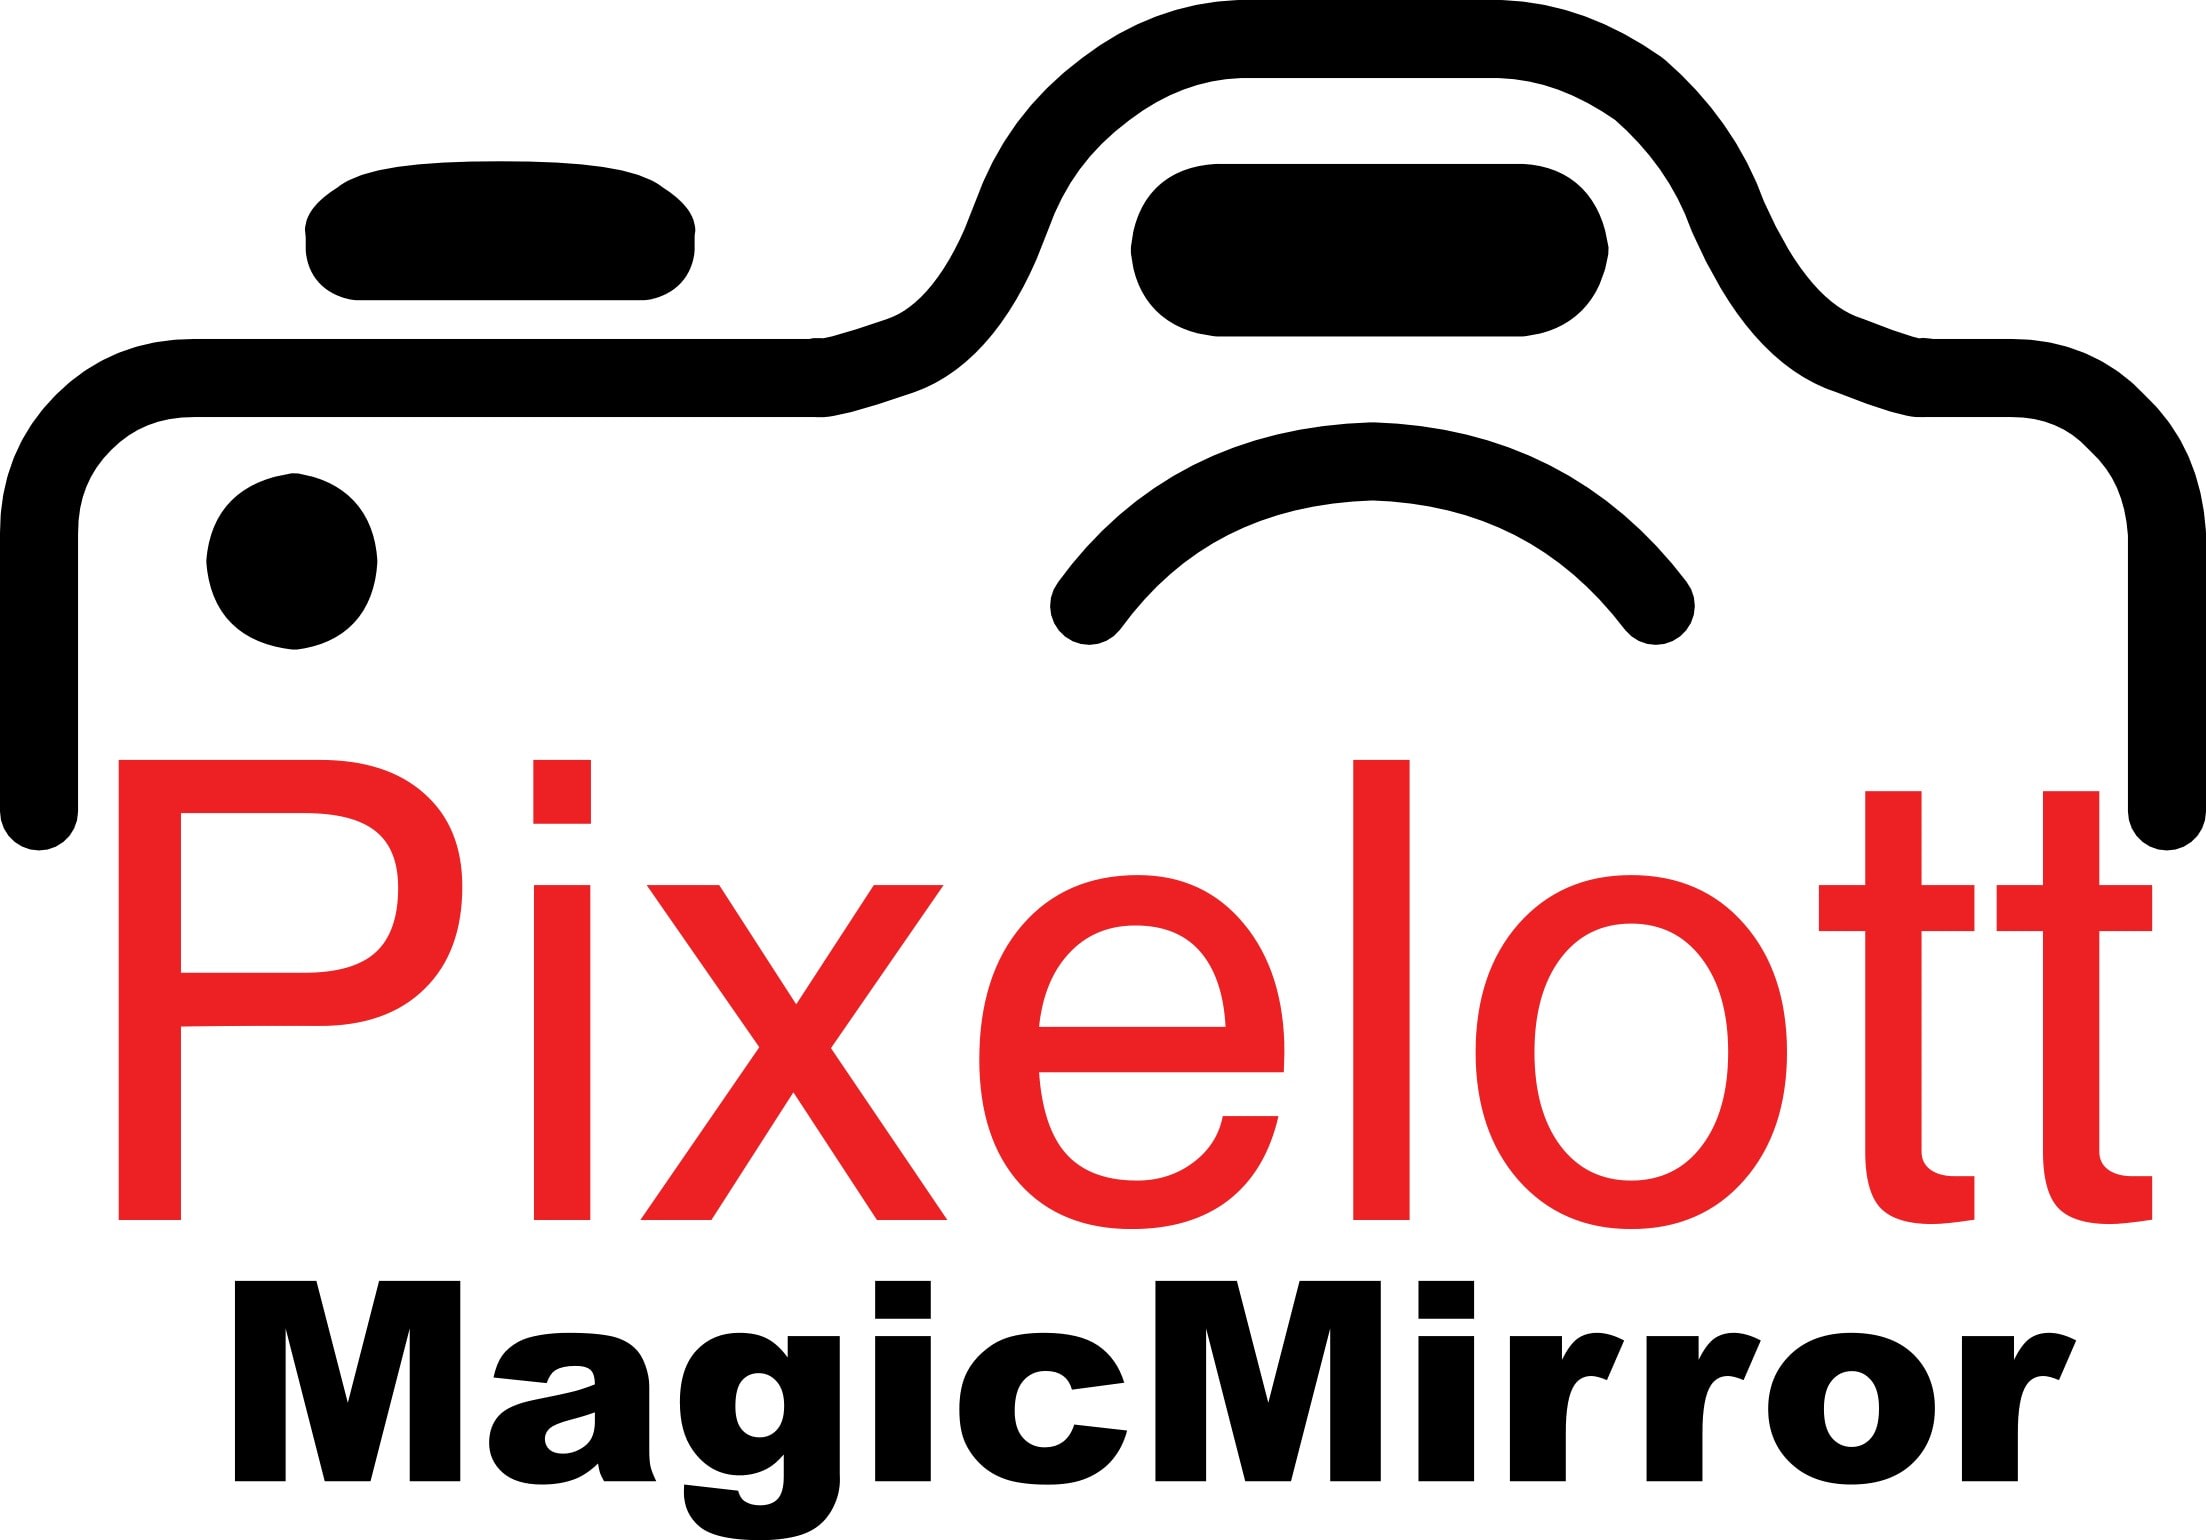 Pixelott MagicMirror